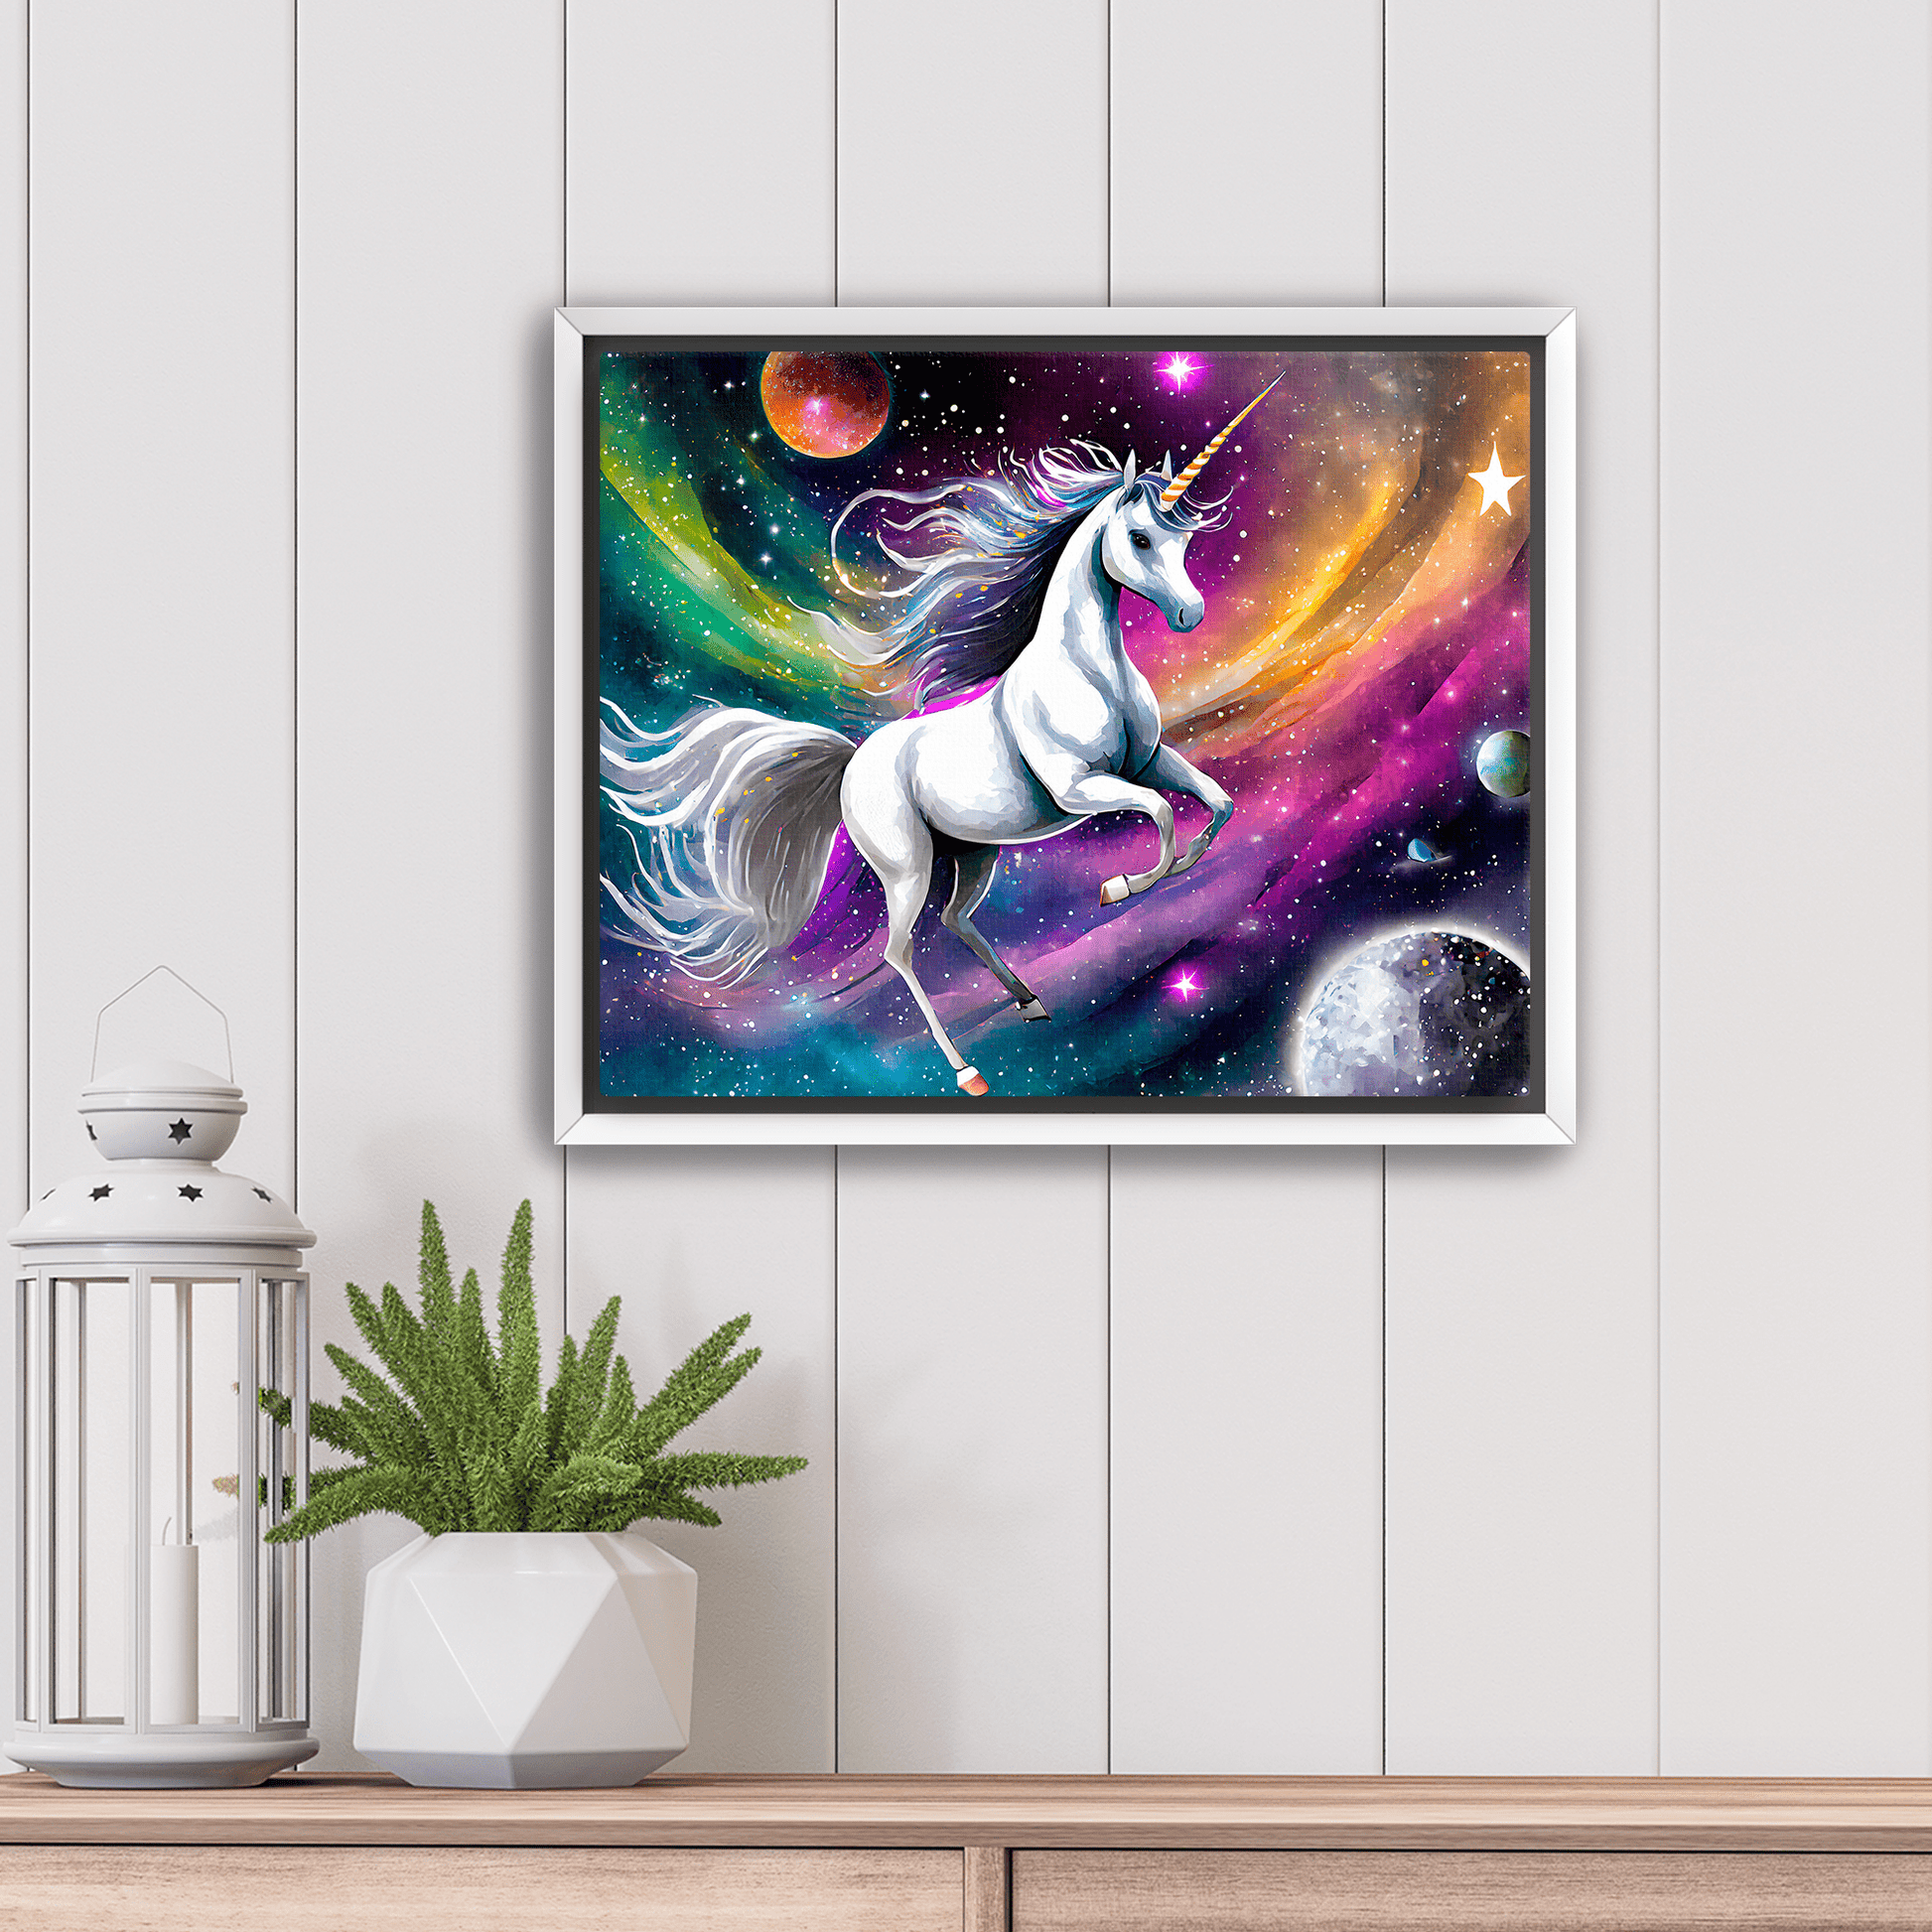 Cosmic Unicorn - Canvas Wrap - Premium Canvas Print